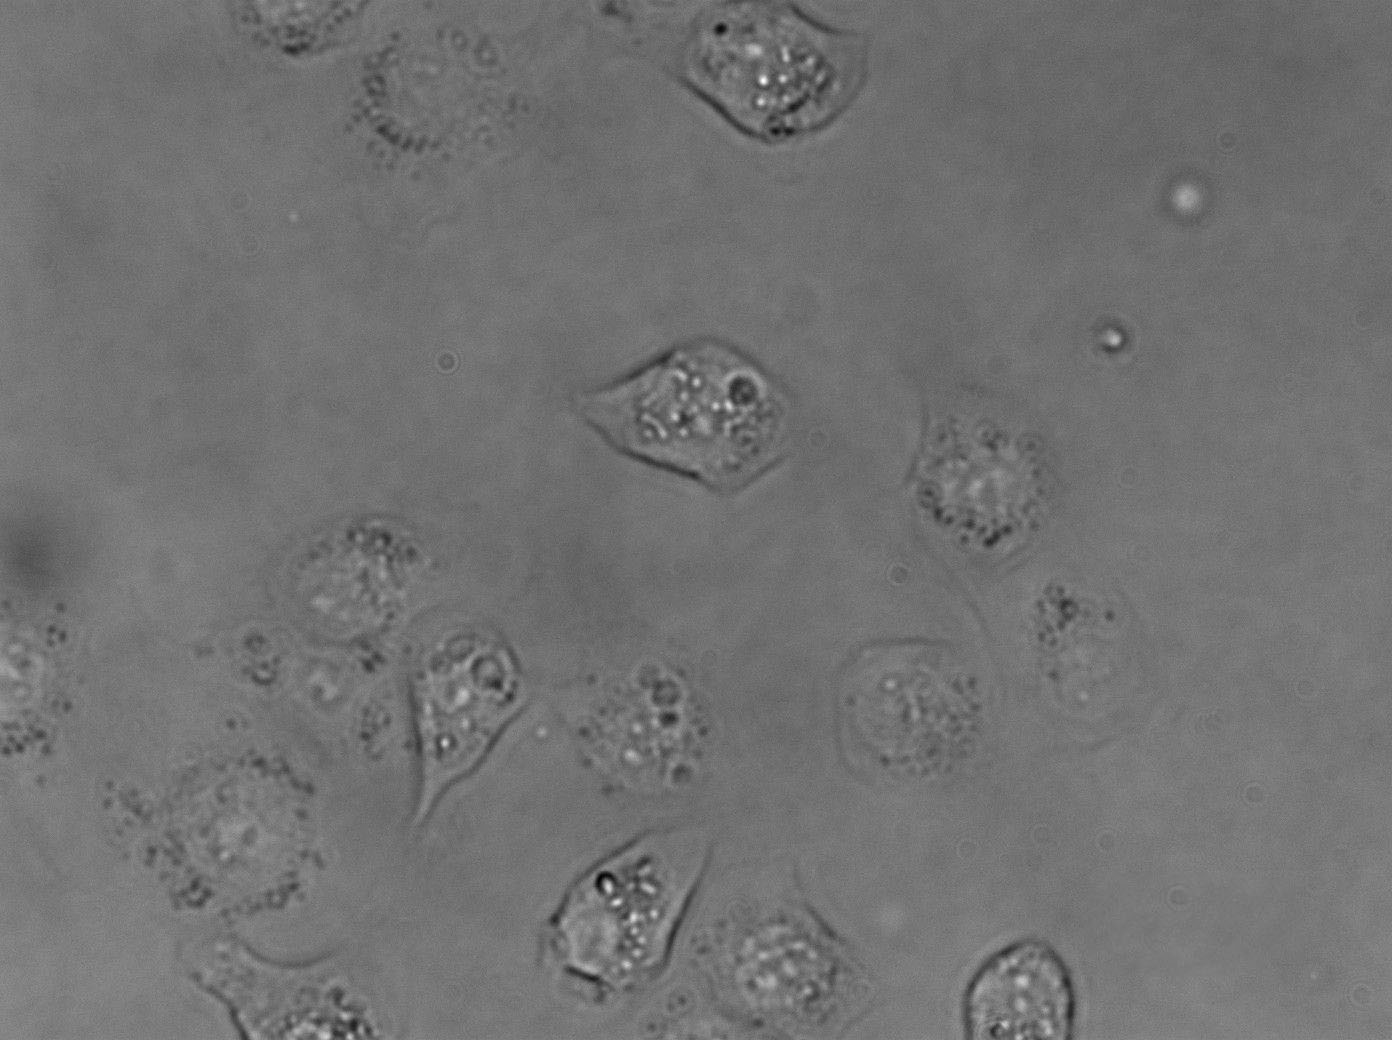 WSU-HN13 Cell|人口腔鳞状细胞癌细胞,WSU-HN13 Cell